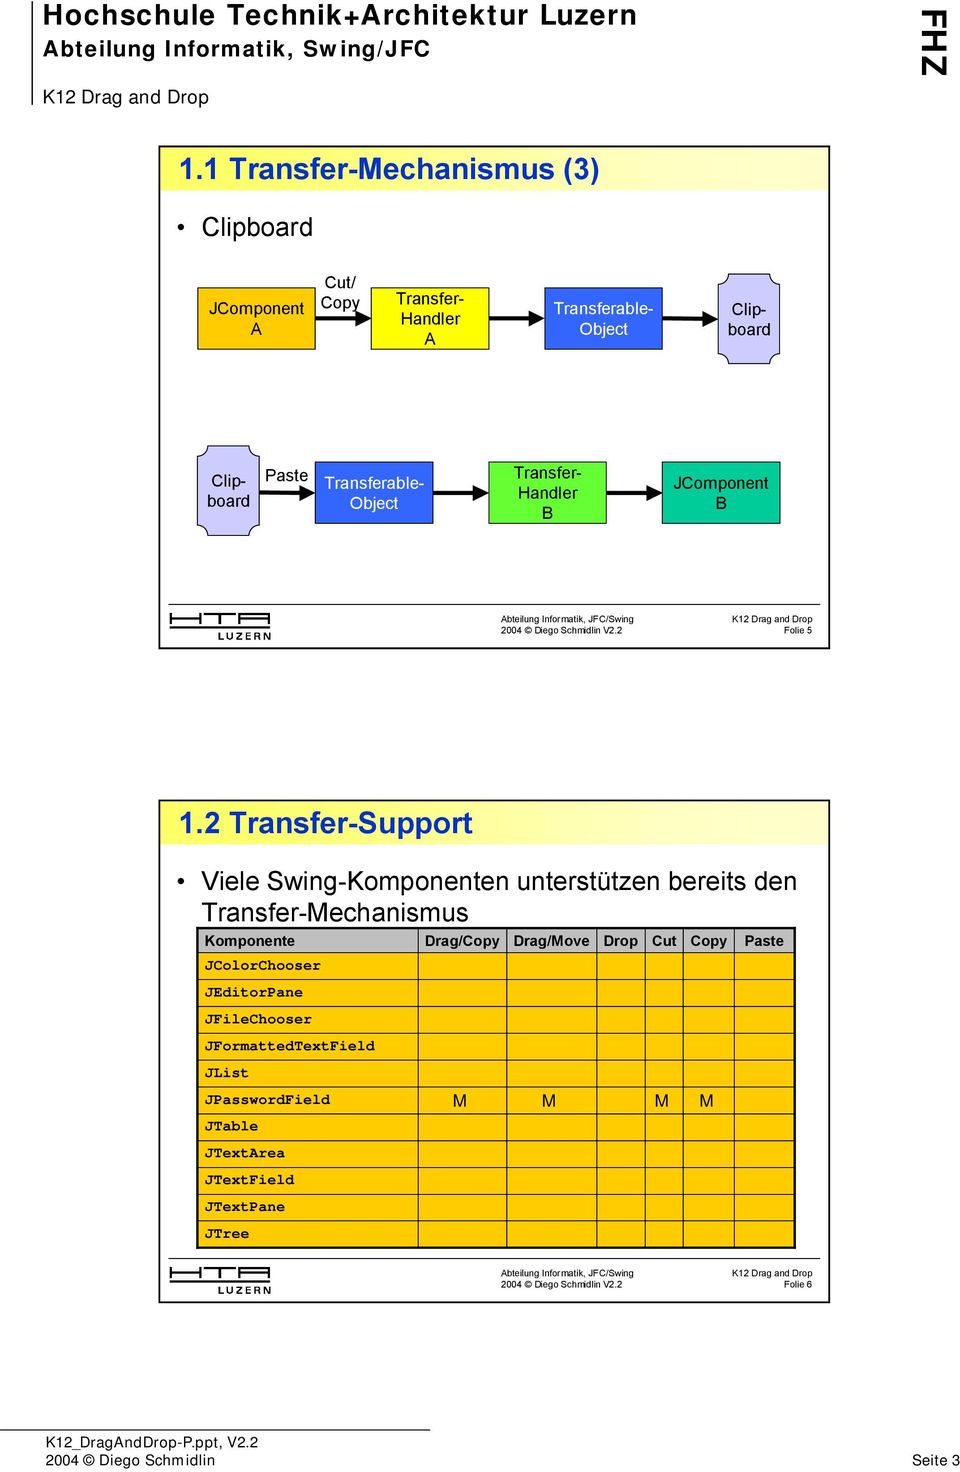 2 Transfer-Support Viele Swing-Komponenten unterstützen bereits den Transfer-Mechanismus Komponente JColorChooser JEditorPane